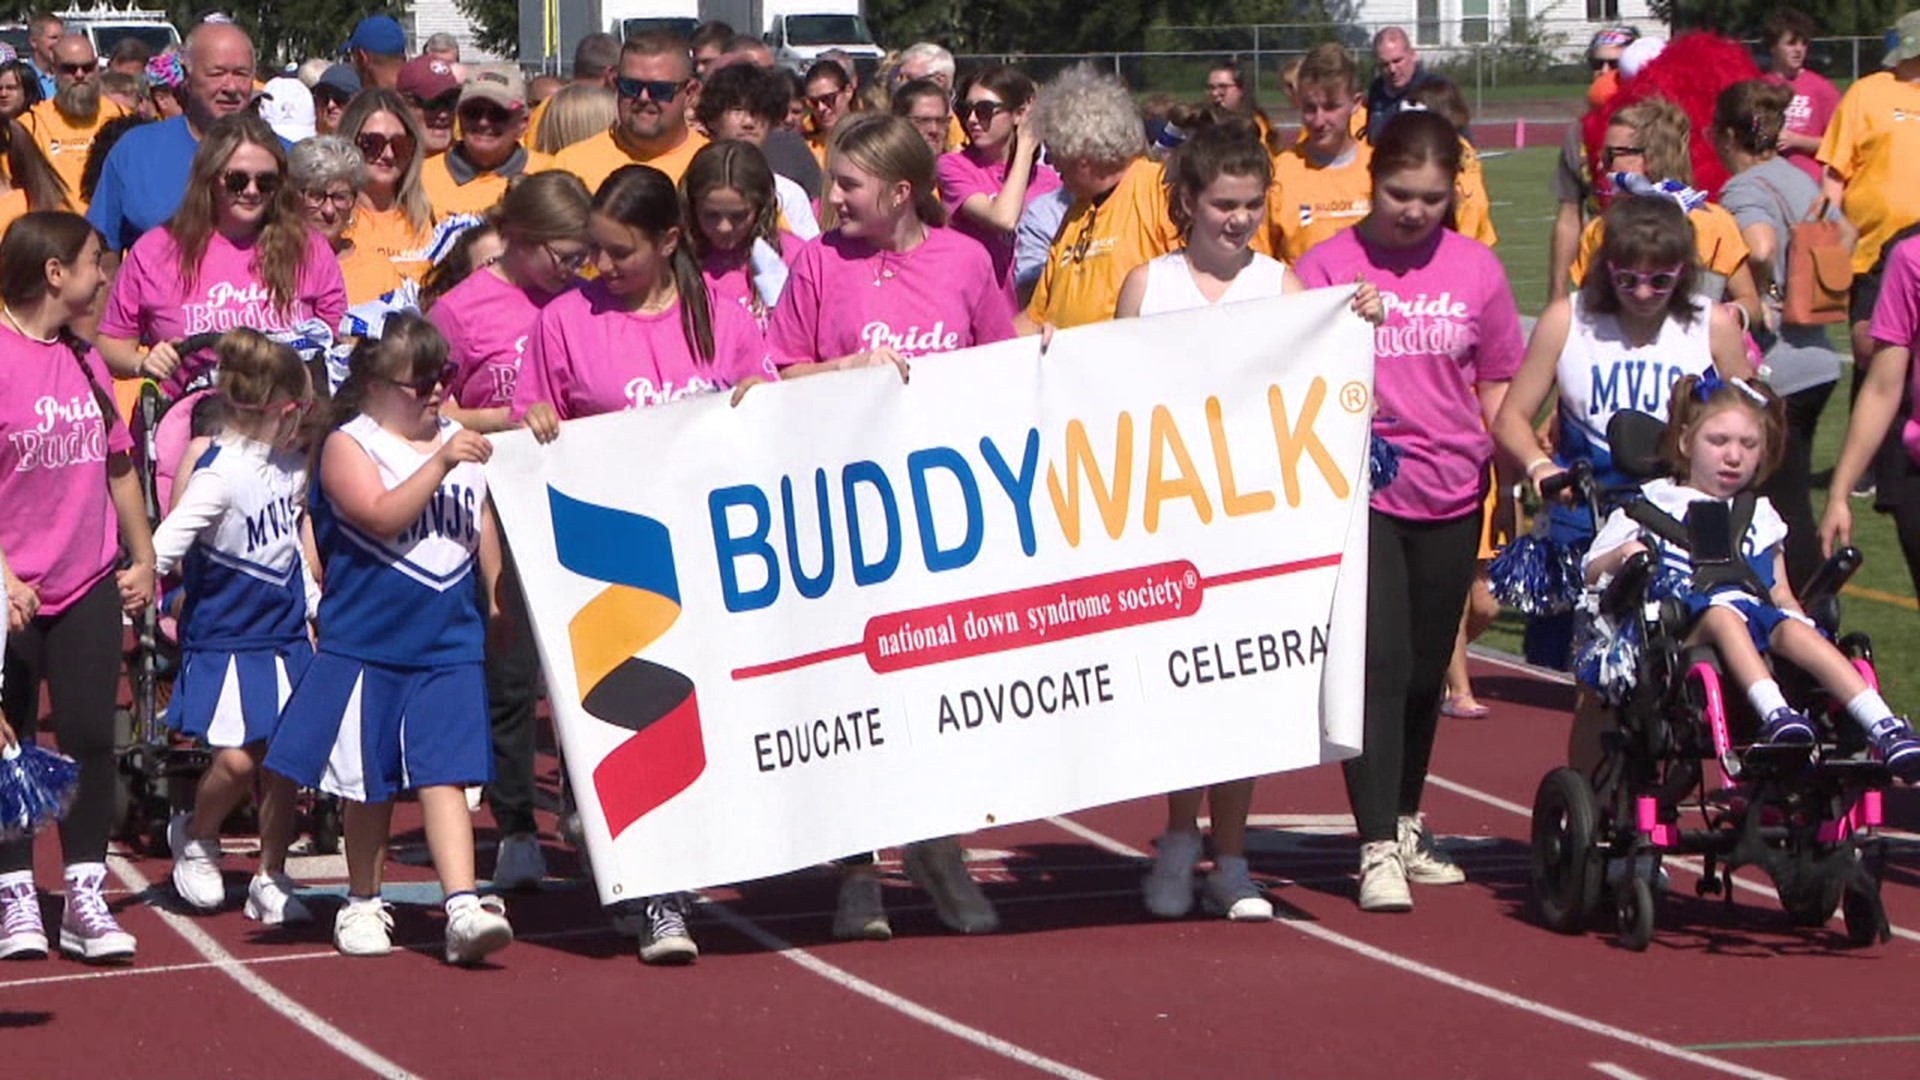 The annual Buddy Walk was held at Scranton's Veterans Memorial Stadium.